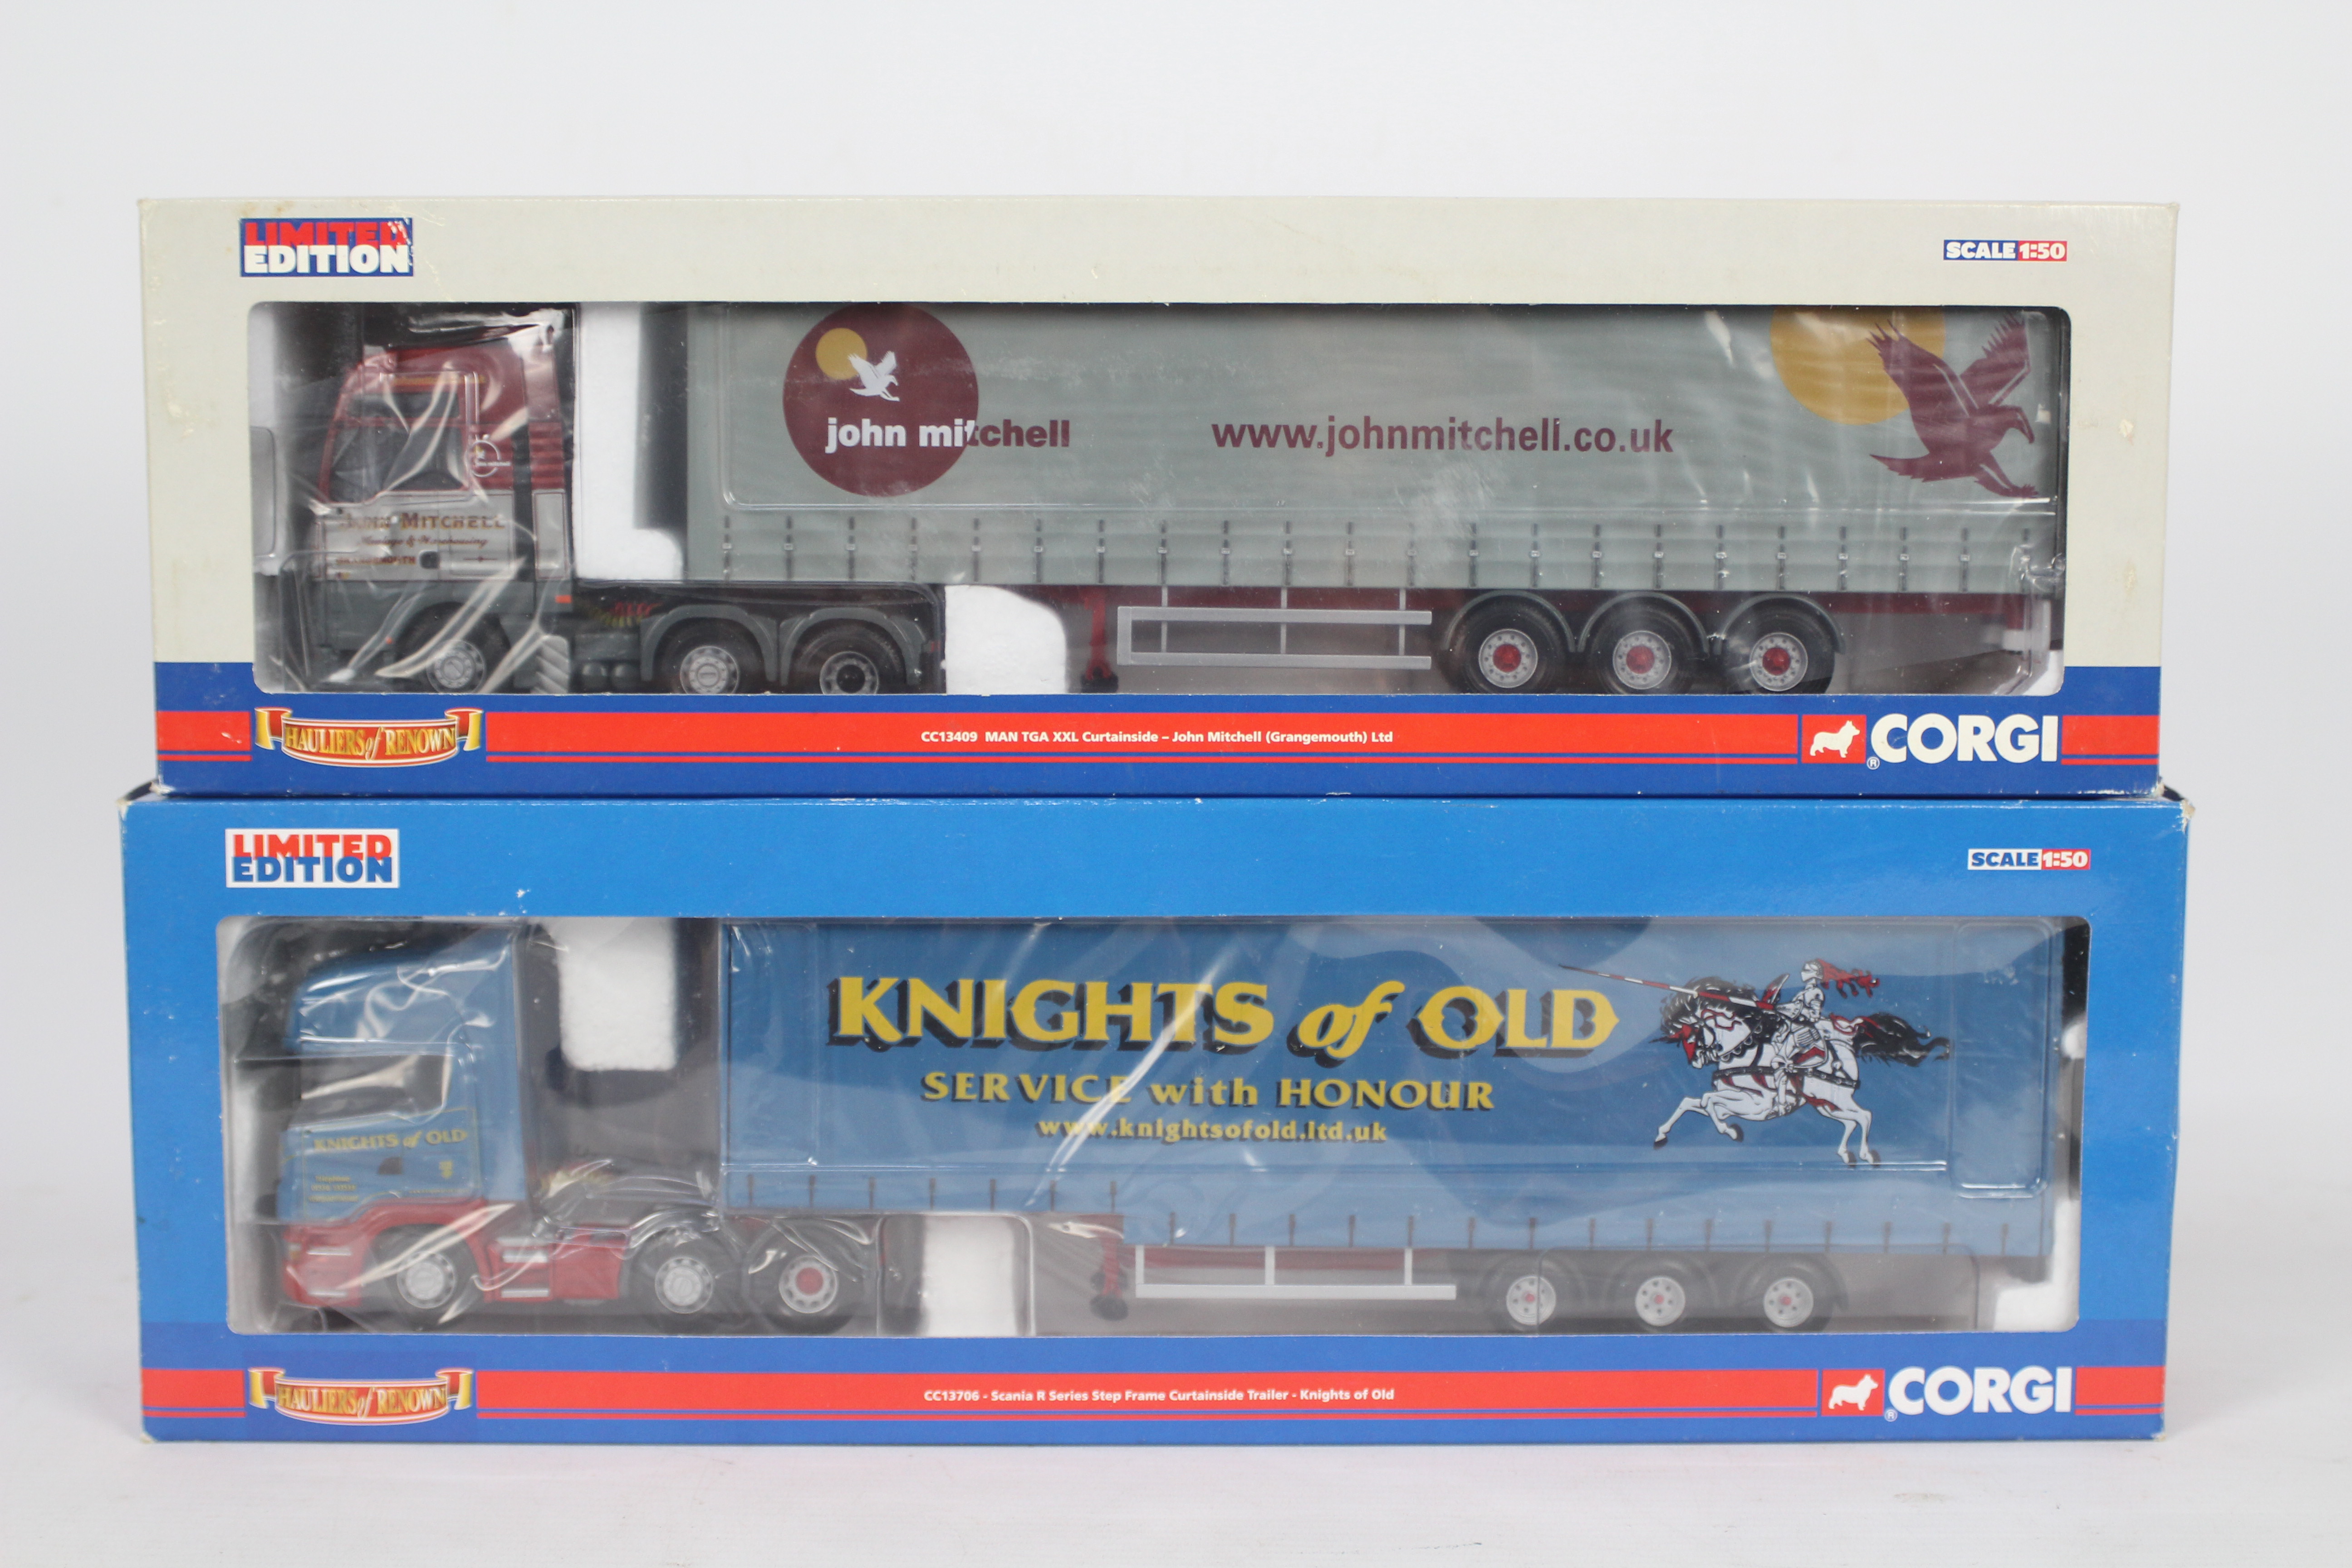 Corgi - Two boxed Corgi Limited Edition 1:50 scale diecast trucks from the Corgi 'Hauliers of